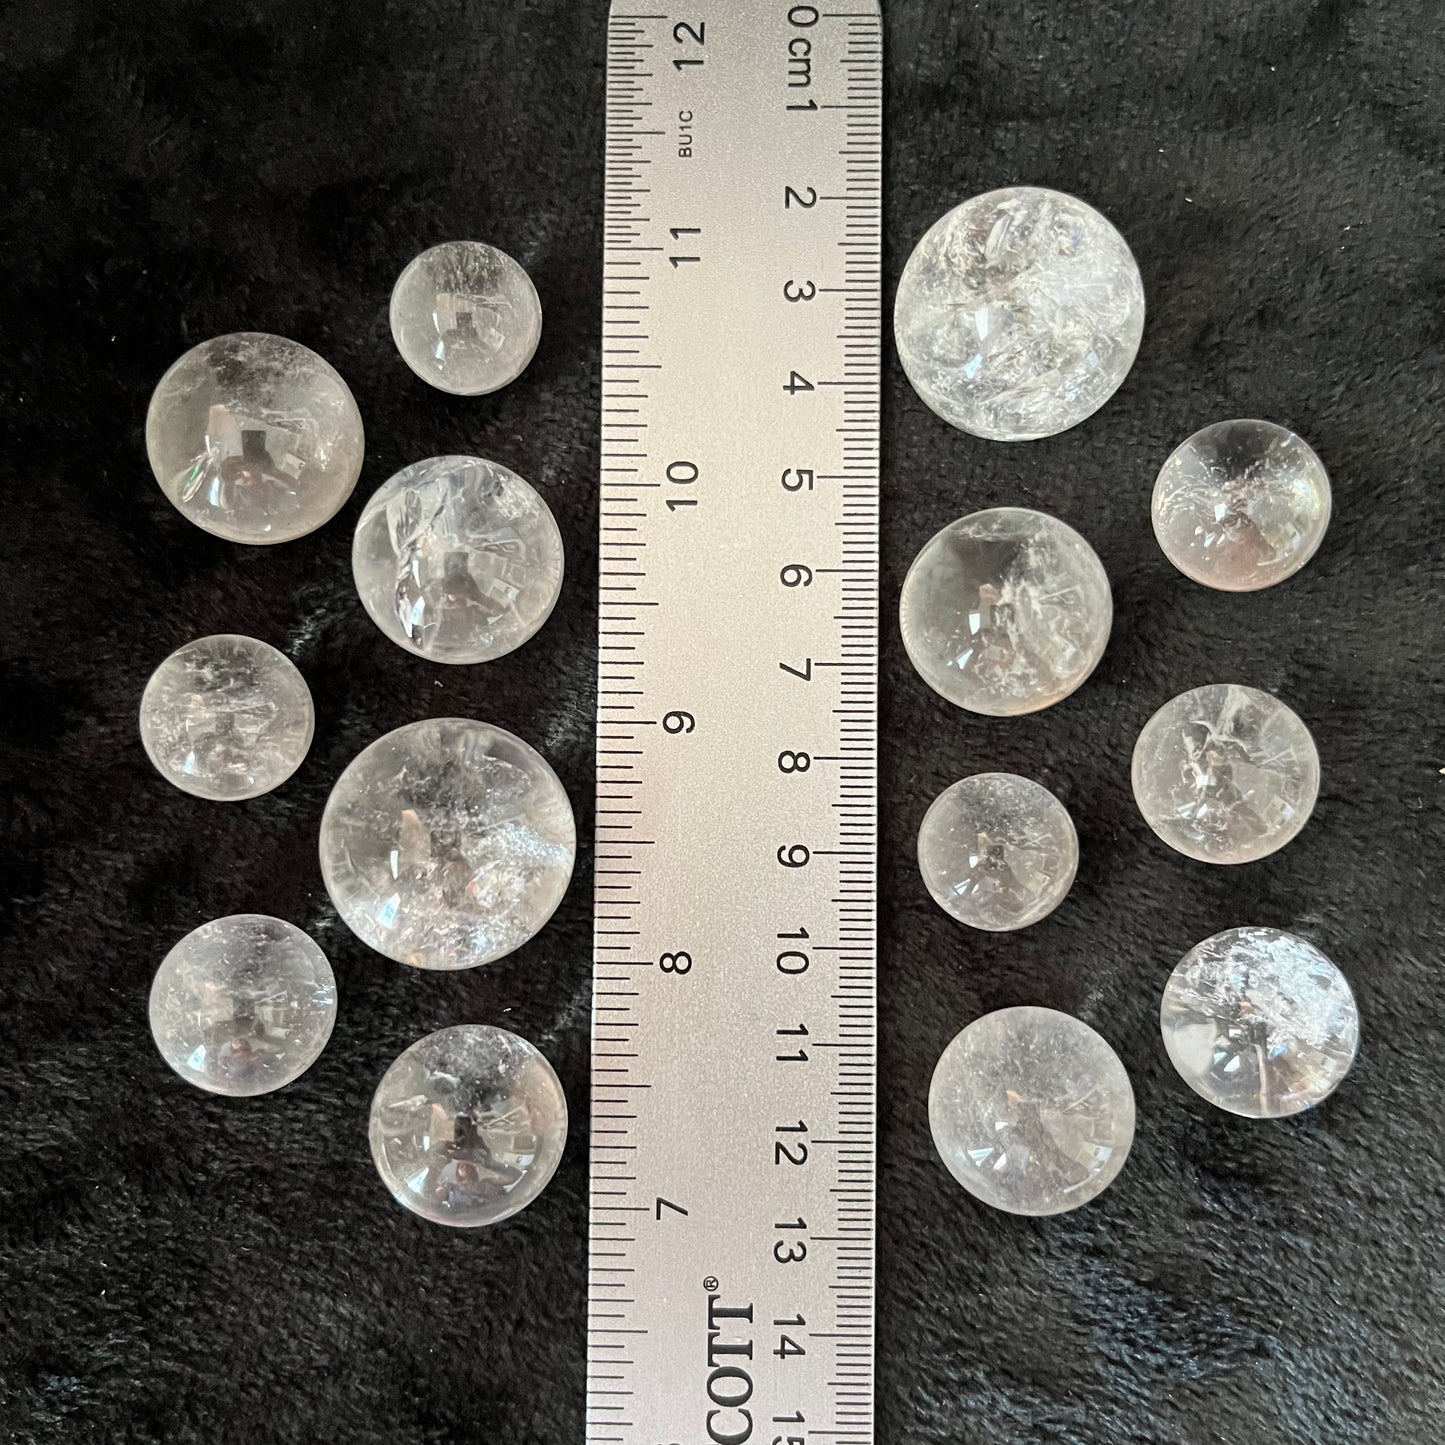 Clear Quartz Spheres, 1 Pound Lot (Approx. 15-35mm) WB-0008